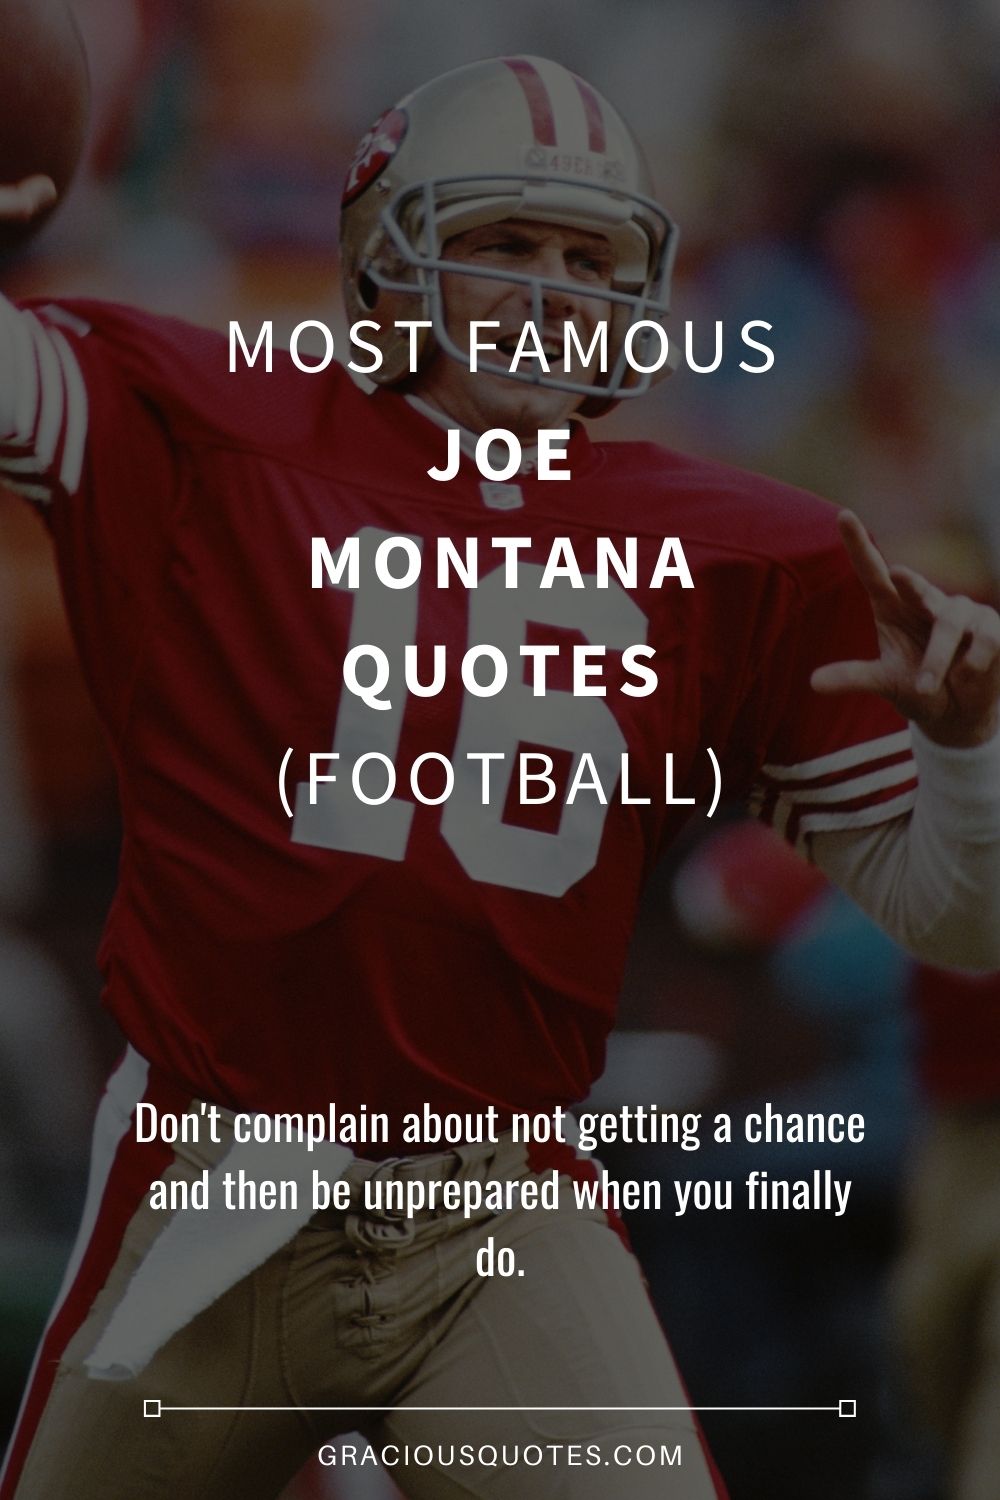 Most Famous Joe Montana Quotes (FOOTBALL) - Gracious Quotes